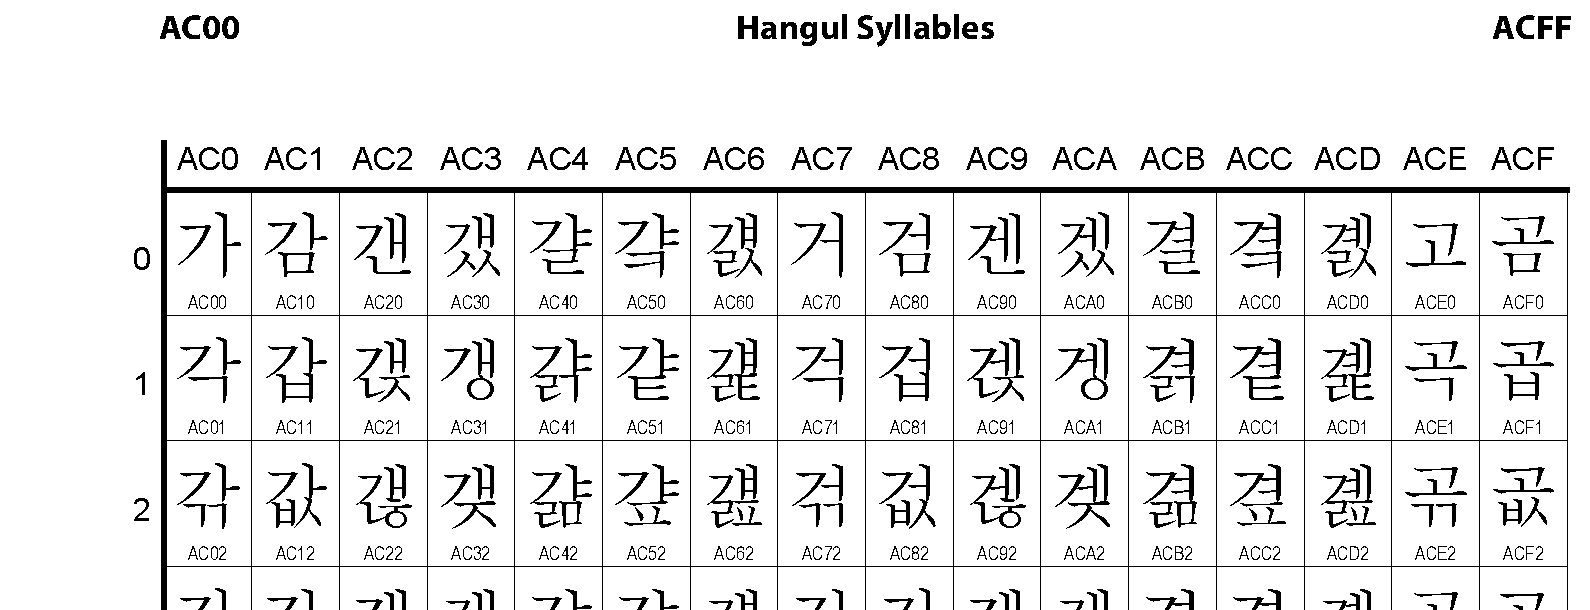 AC20: Hangul Syllables